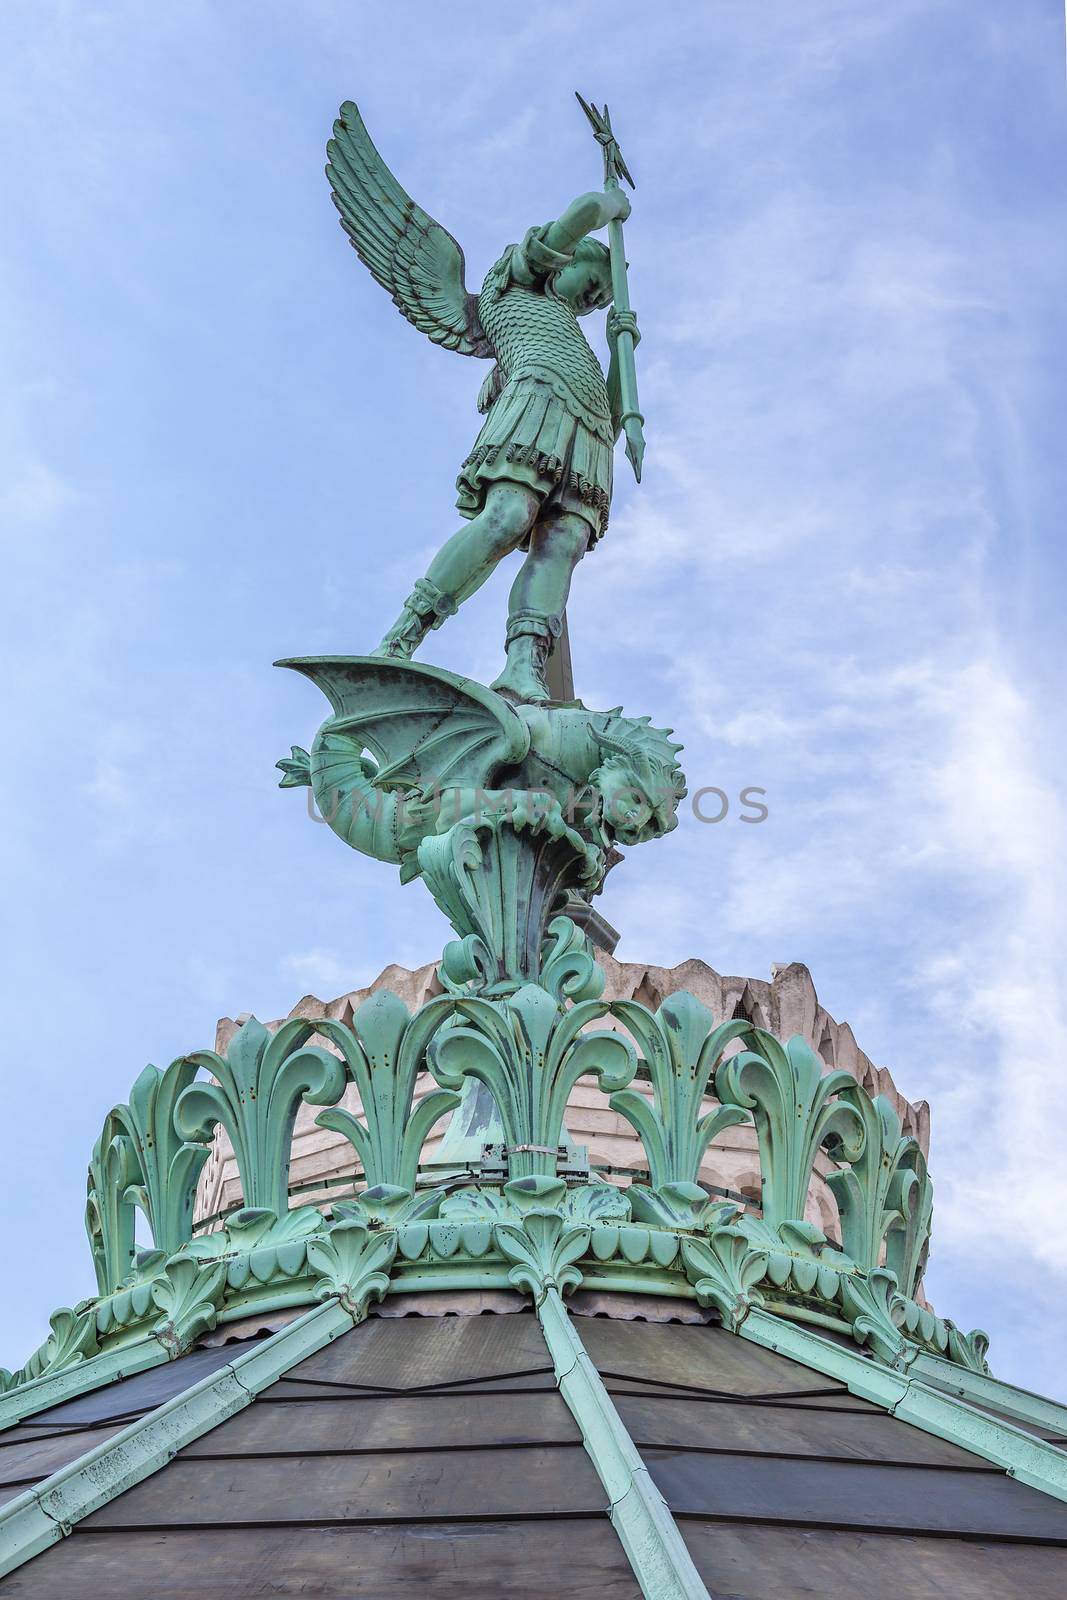 Saint-Michel statue by vwalakte